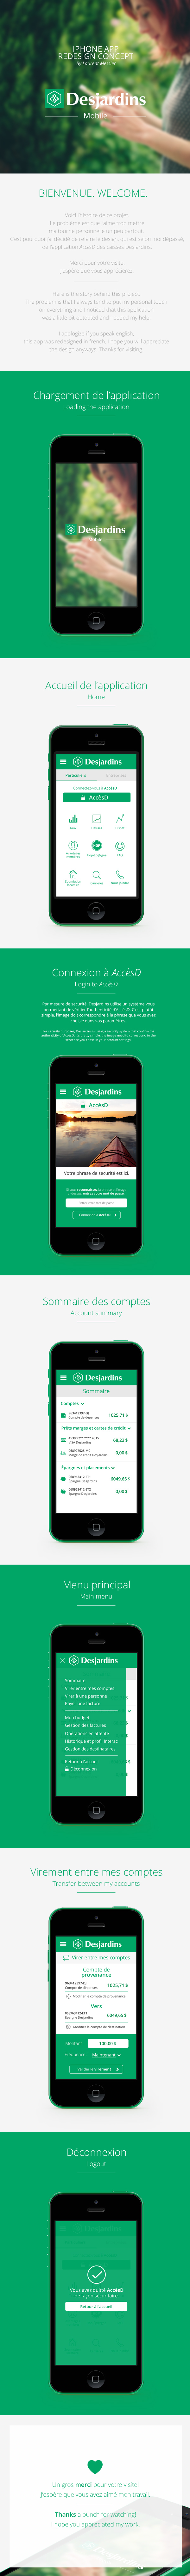 Desjardins app mobile UI Bank design concept redesign